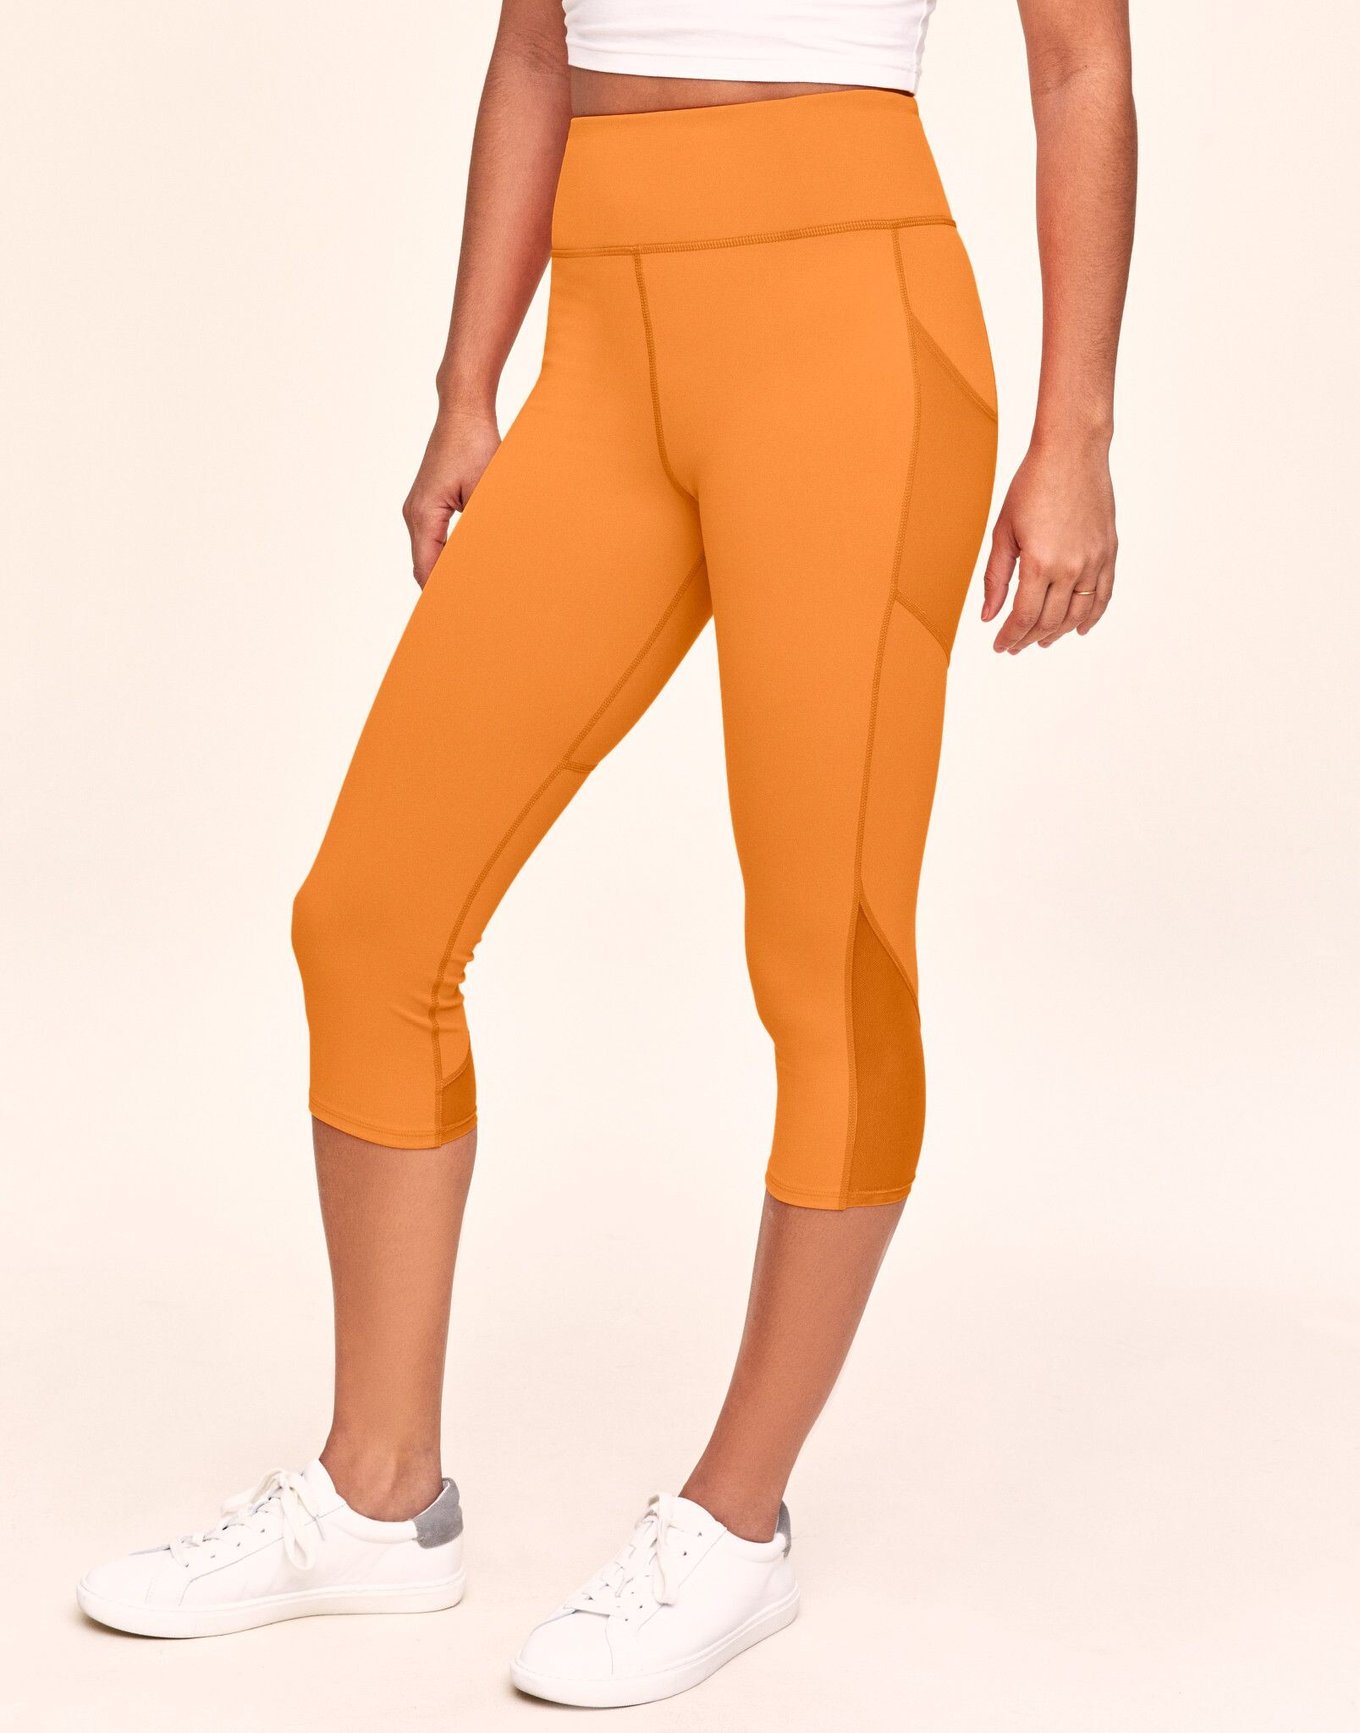 Buy Rust Orange Leggings for Women by AVAASA MIX N' MATCH Online